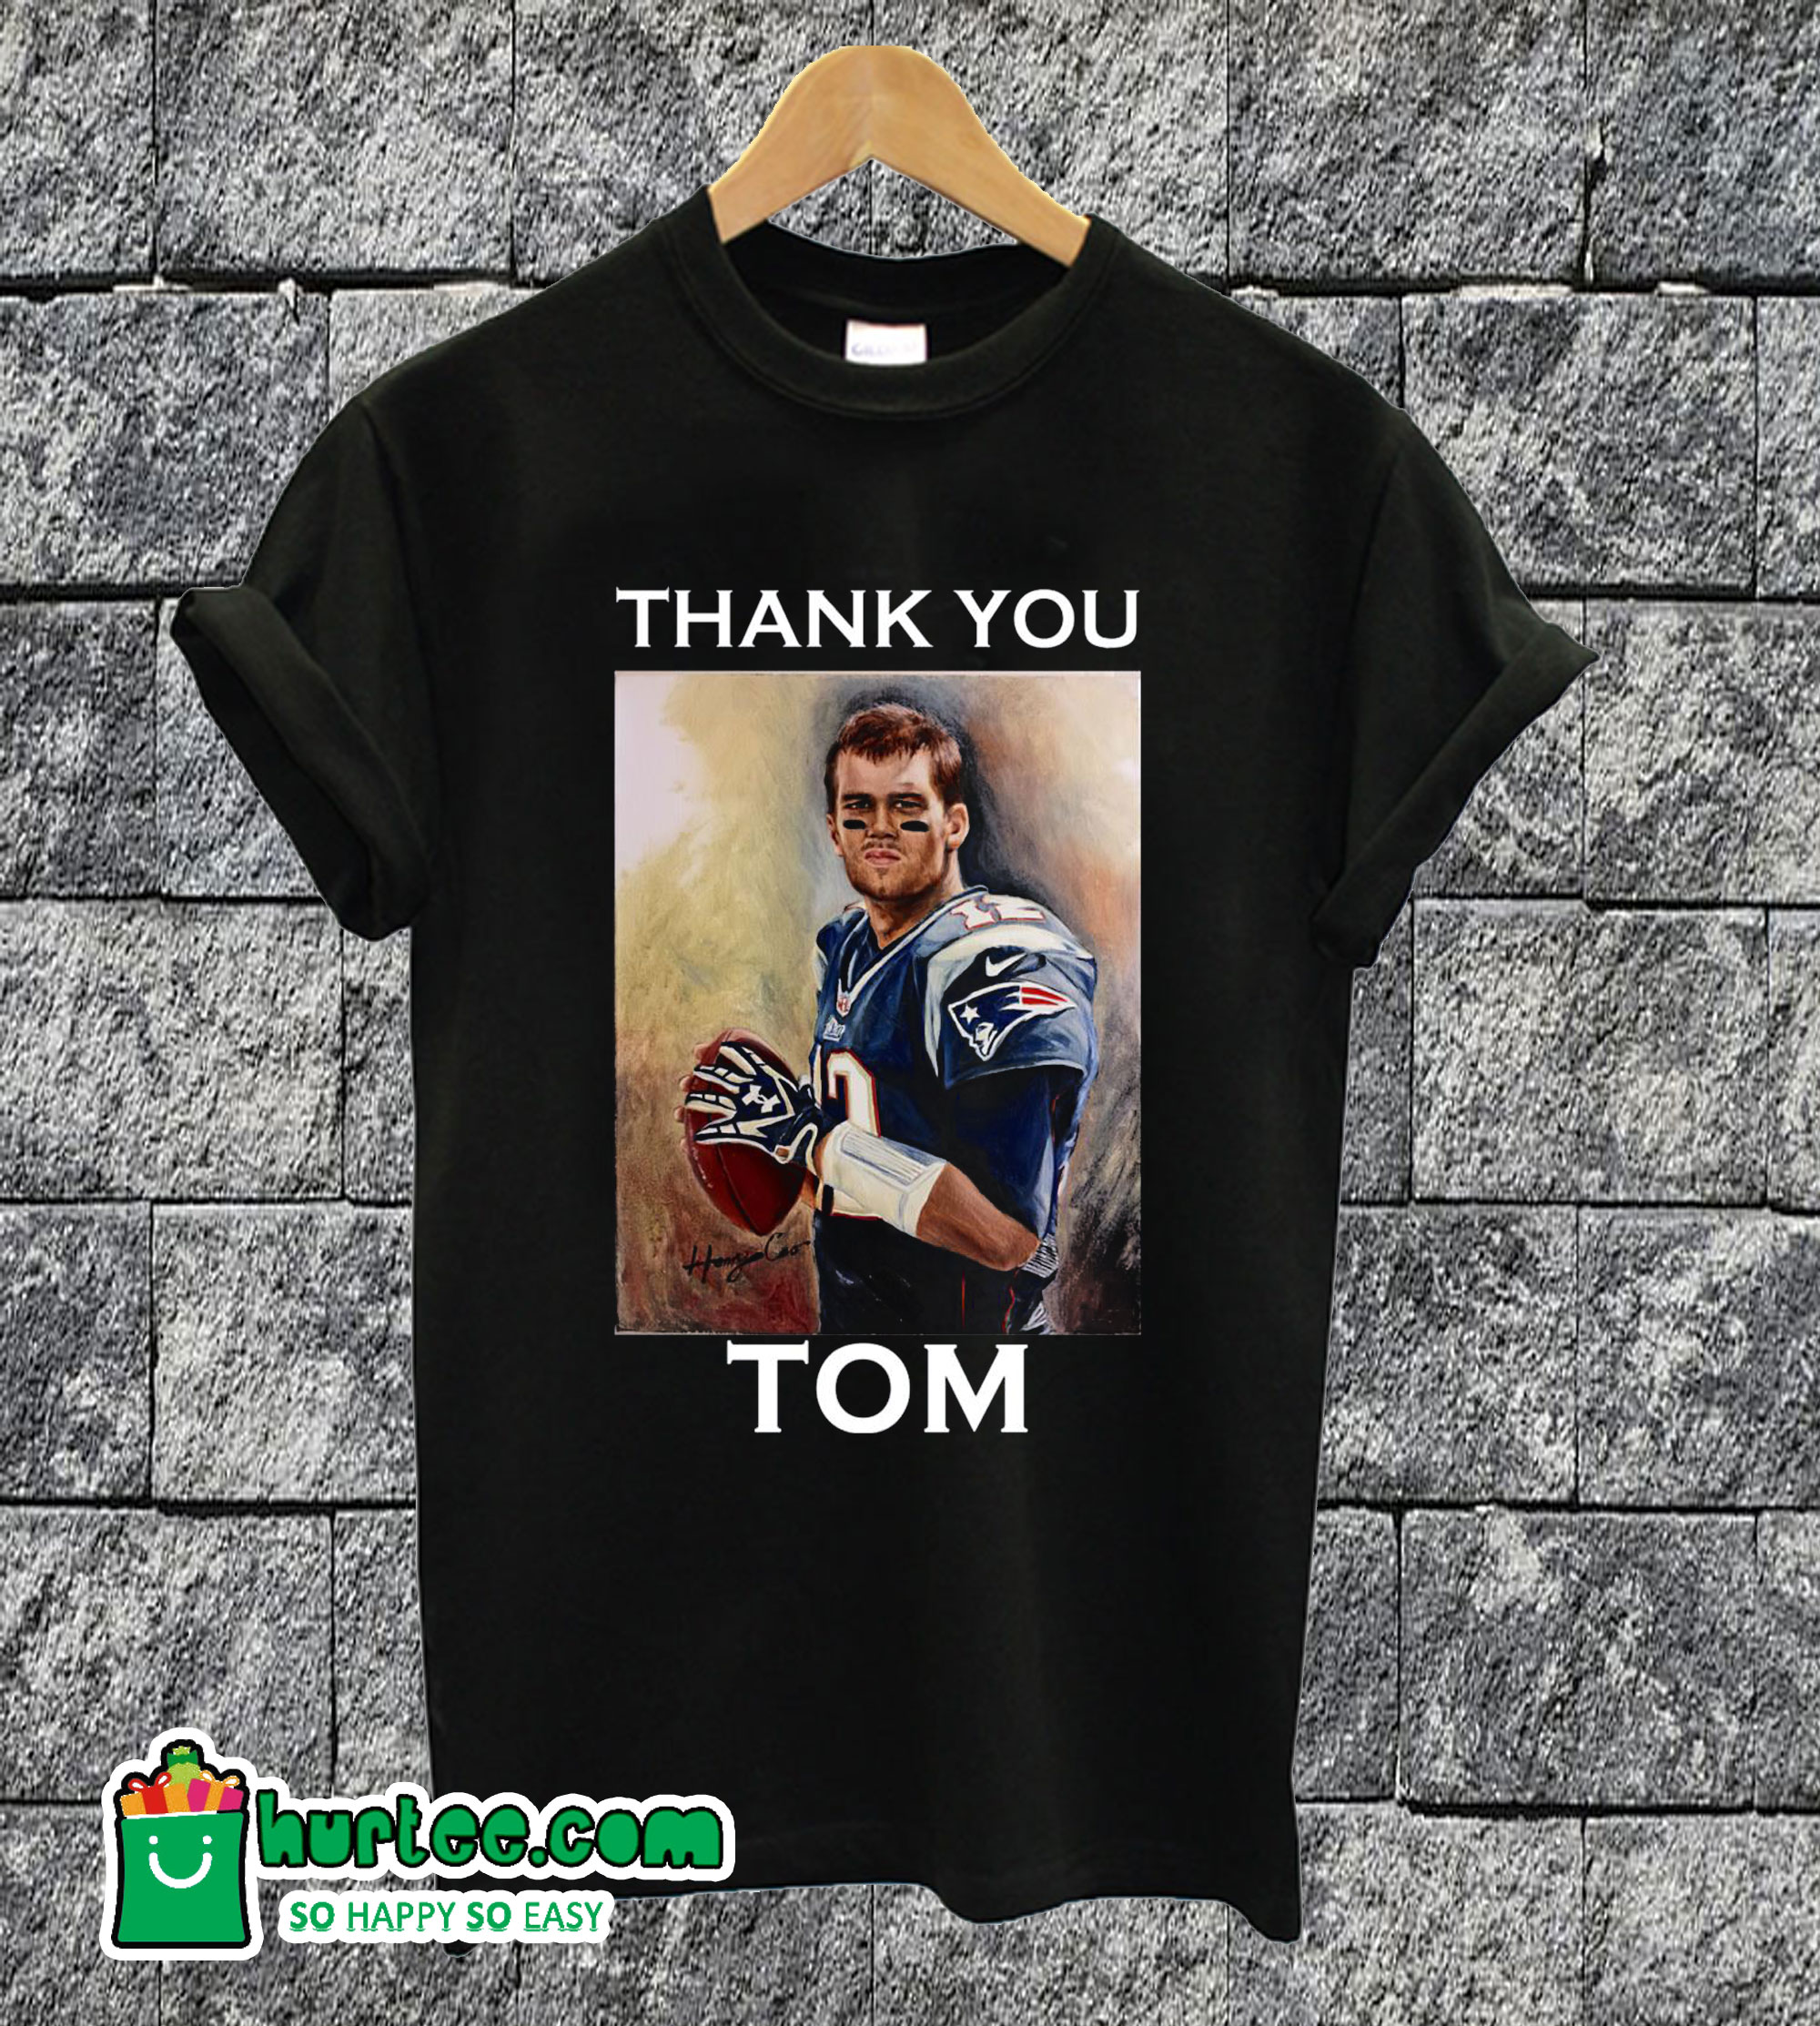 tom brady tee shirts